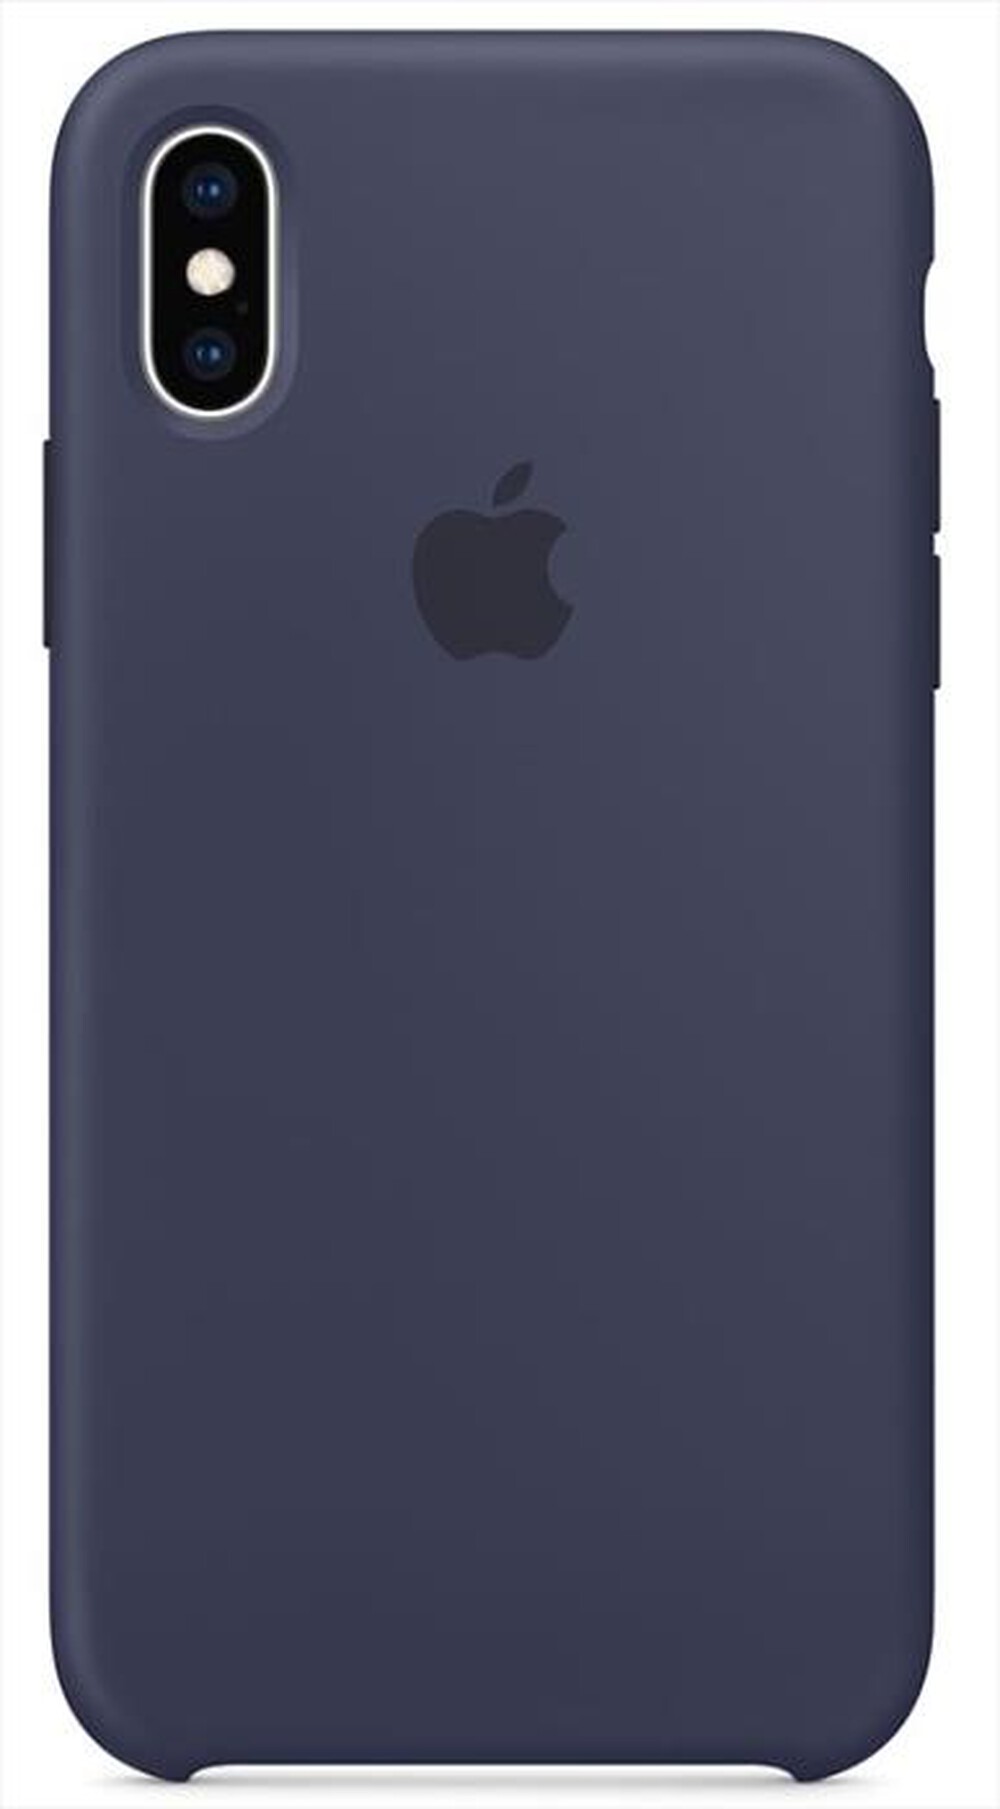 "APPLE - Custodia in silicone per iPhone XS MAX-Blu Notte"